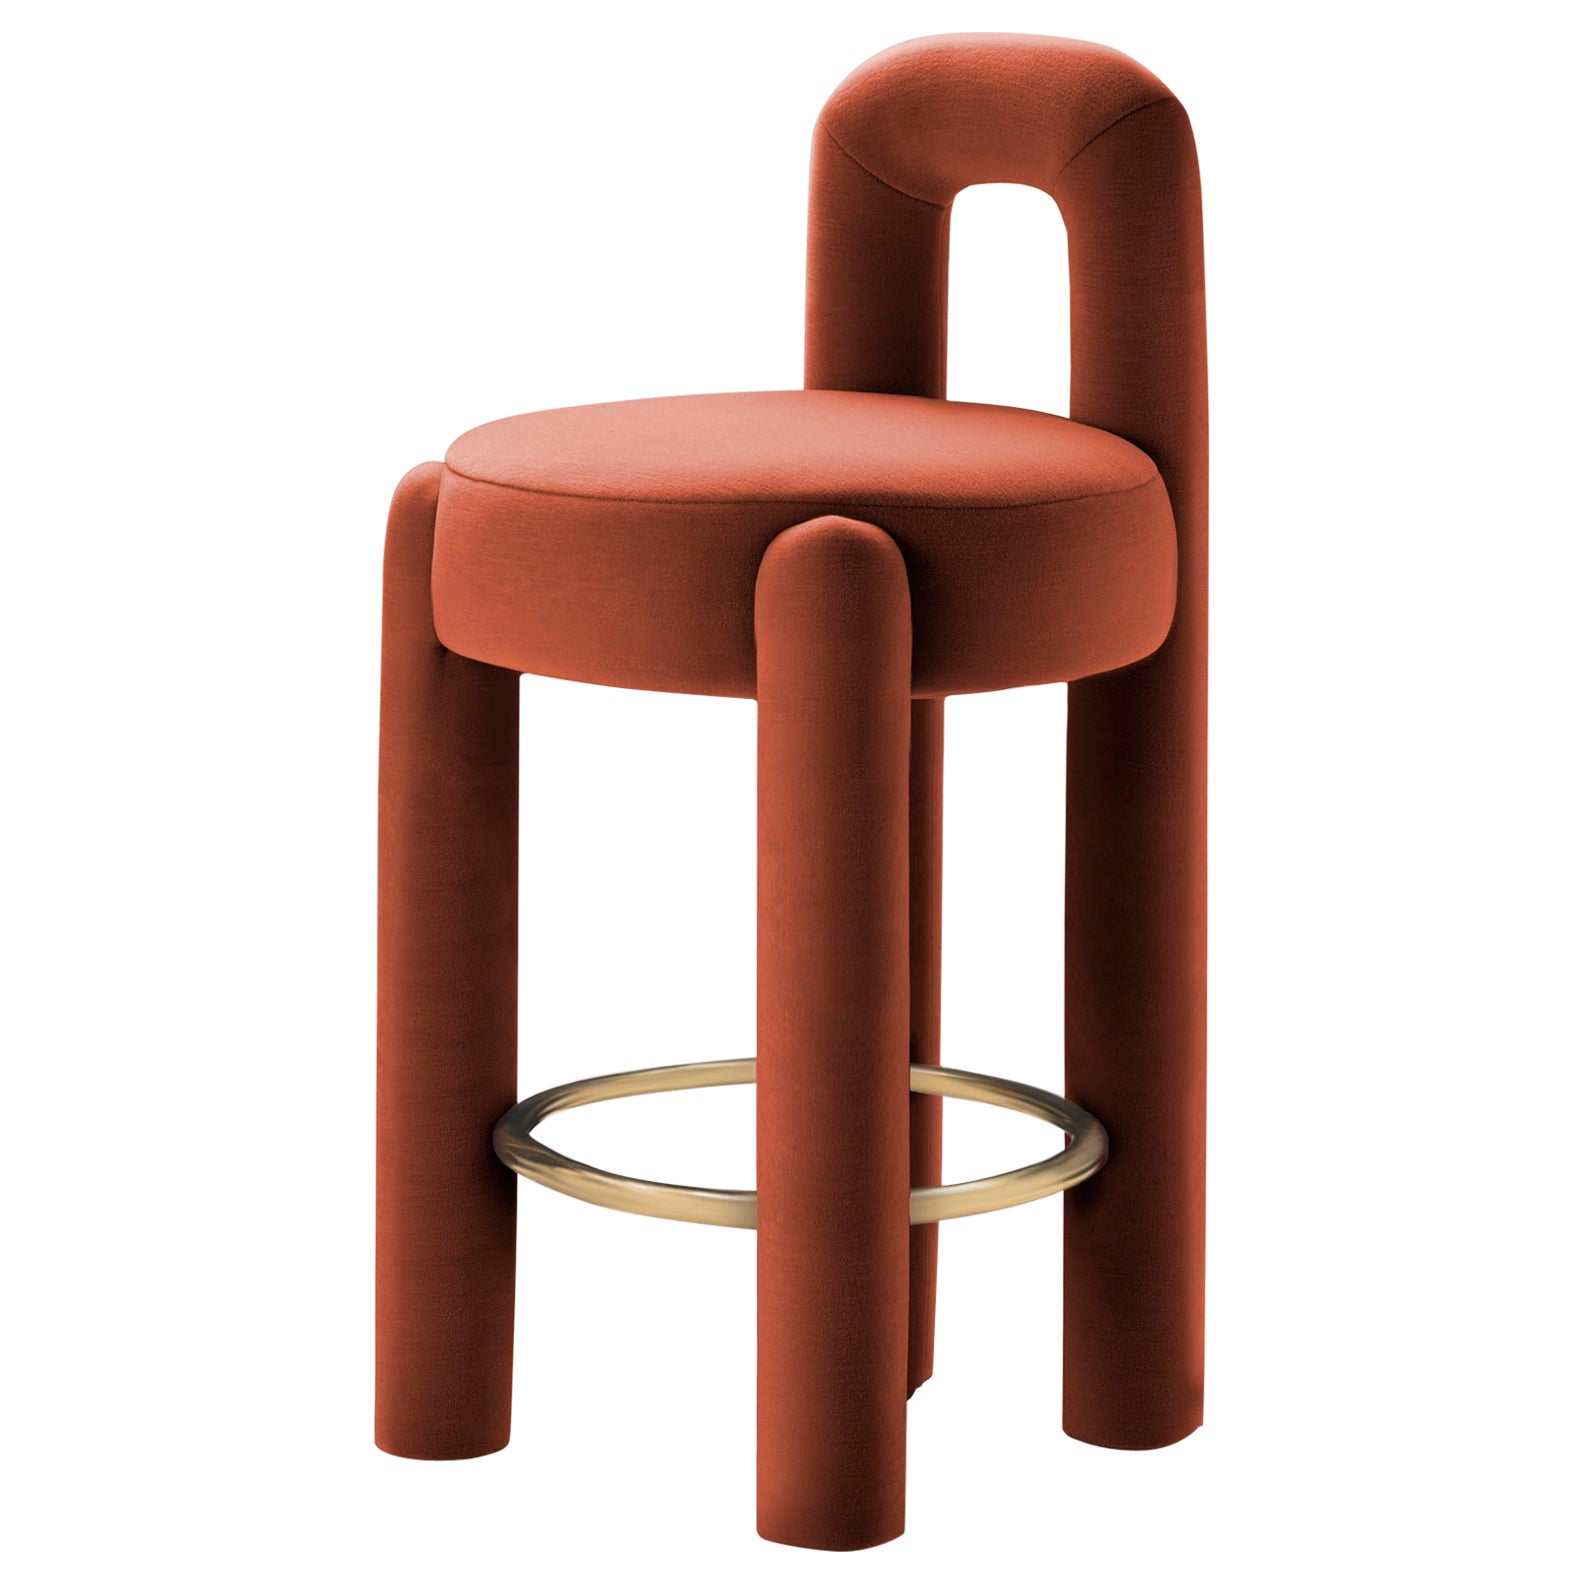 DOOQ! Organic Modern Marlon Counter Chair in Brown Kvadrat by P. Franceschini